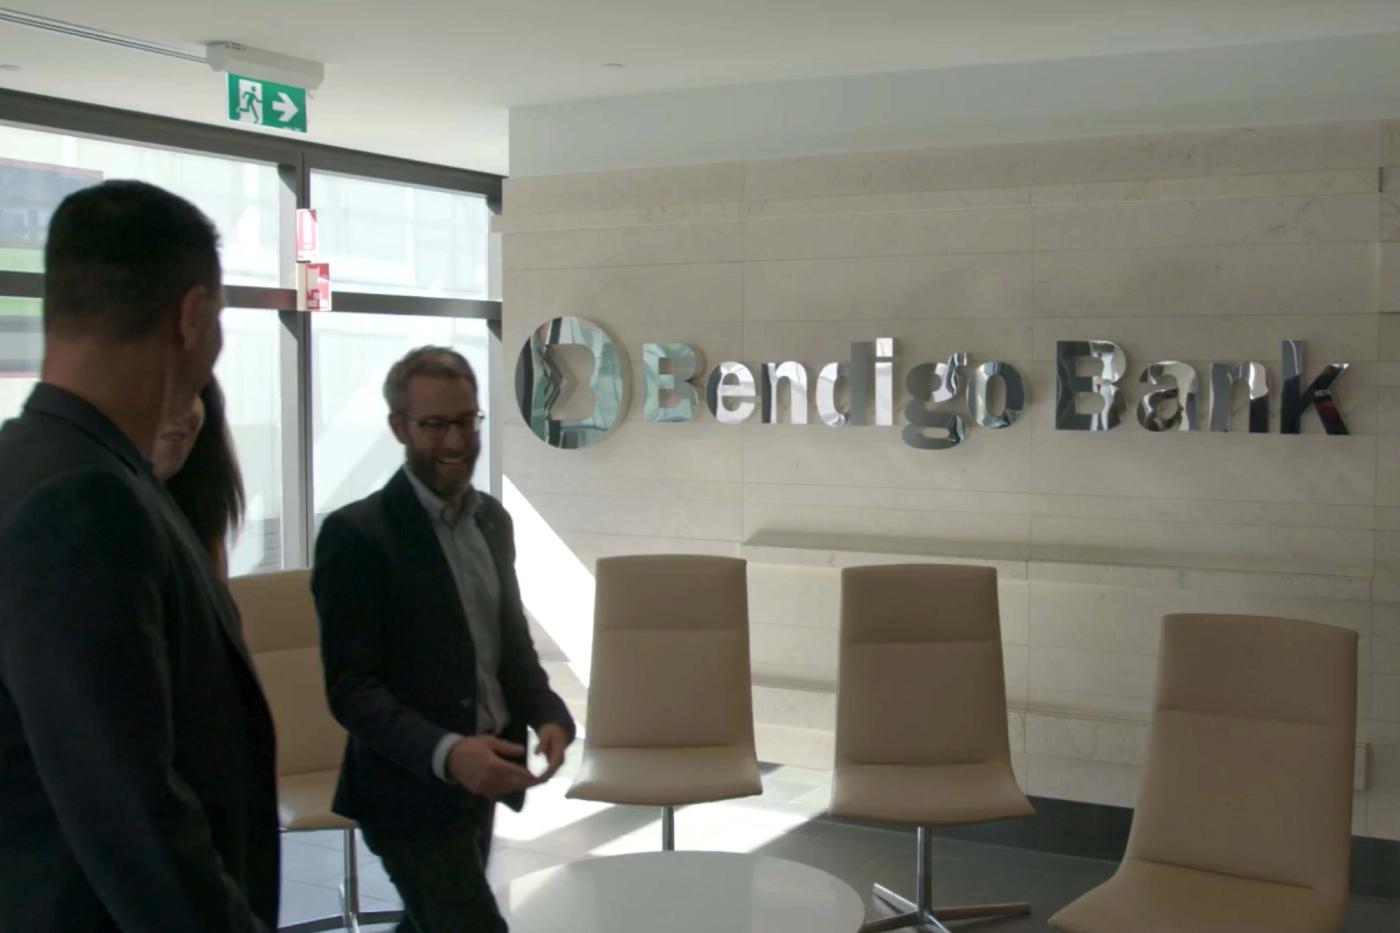 Bendigo Bank Cloud First Transformation Strategy